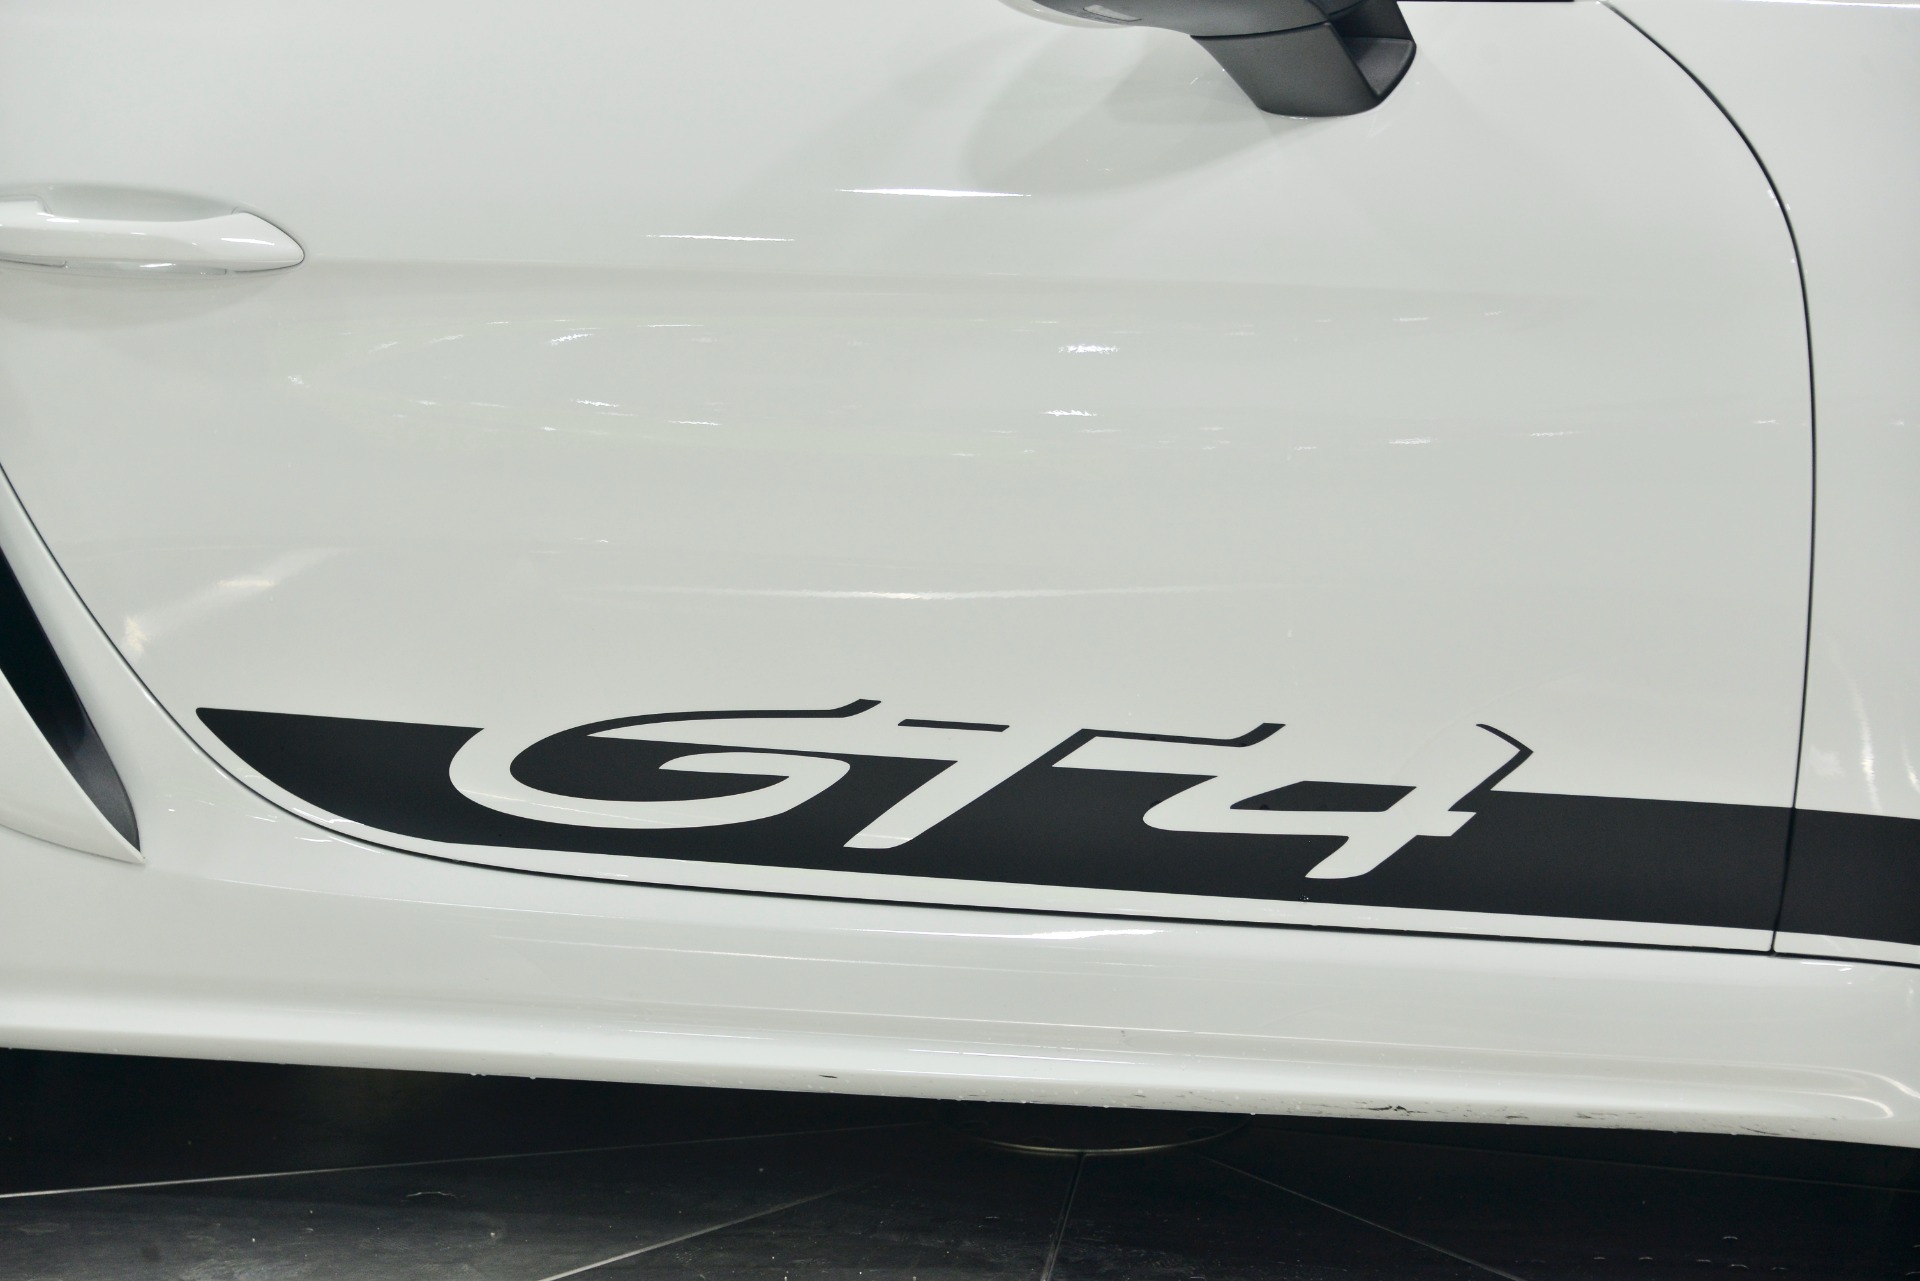 🇬🇧 FOR SALE £150 – Porsche Cayman 718 GT4 Indoor Car Cover (Item no.  98204400004)